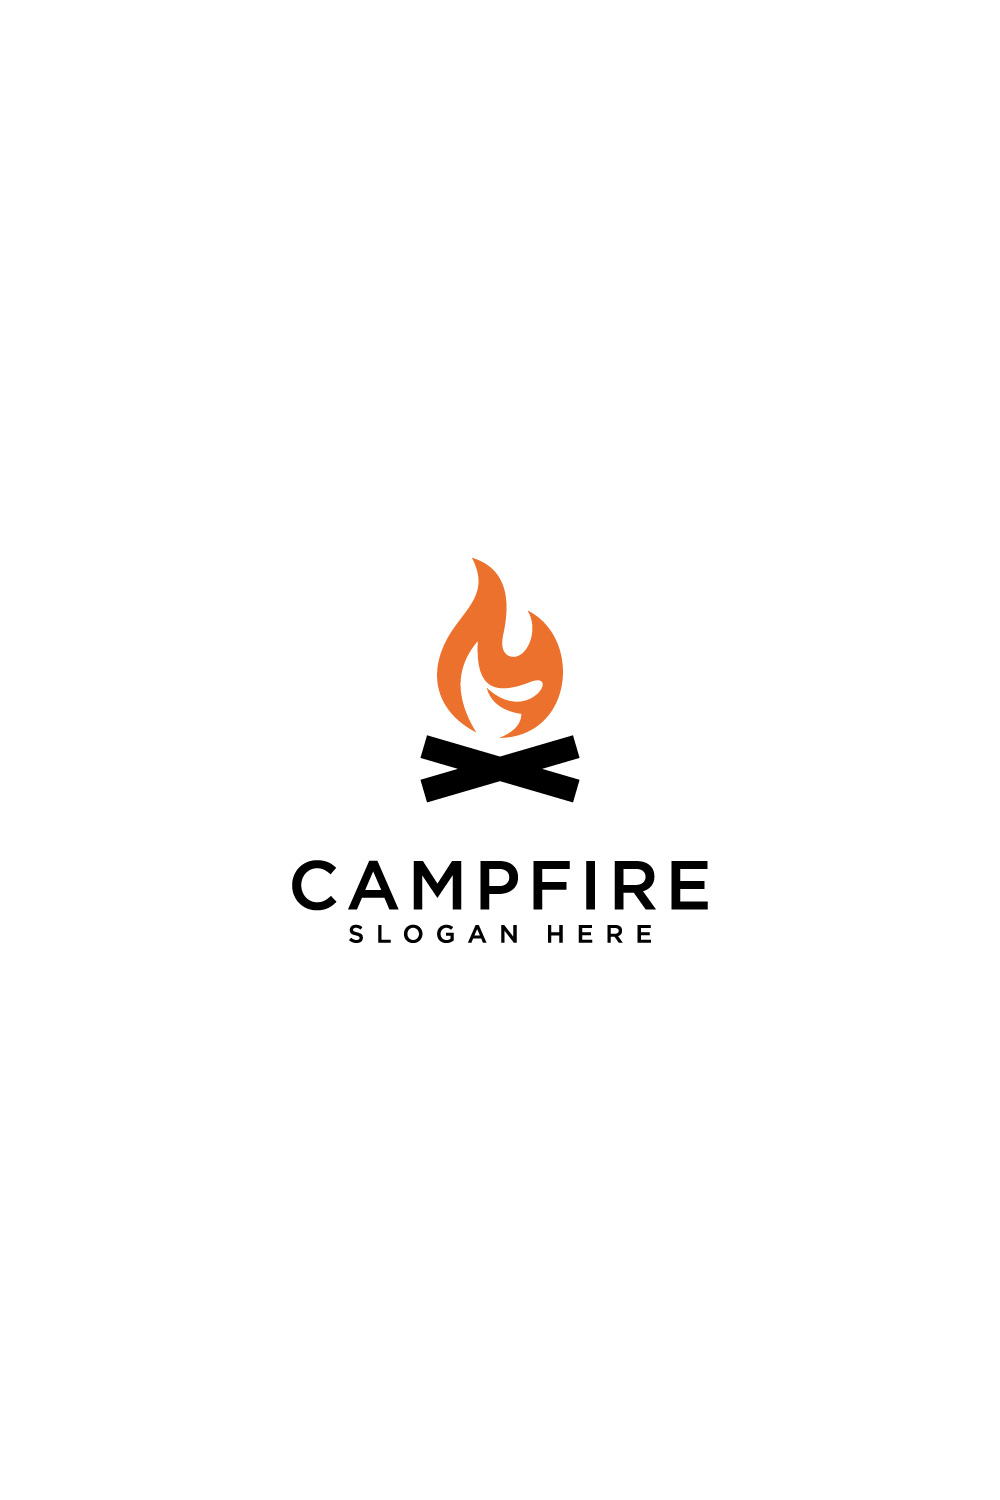 campfire vector design pinterest preview image.